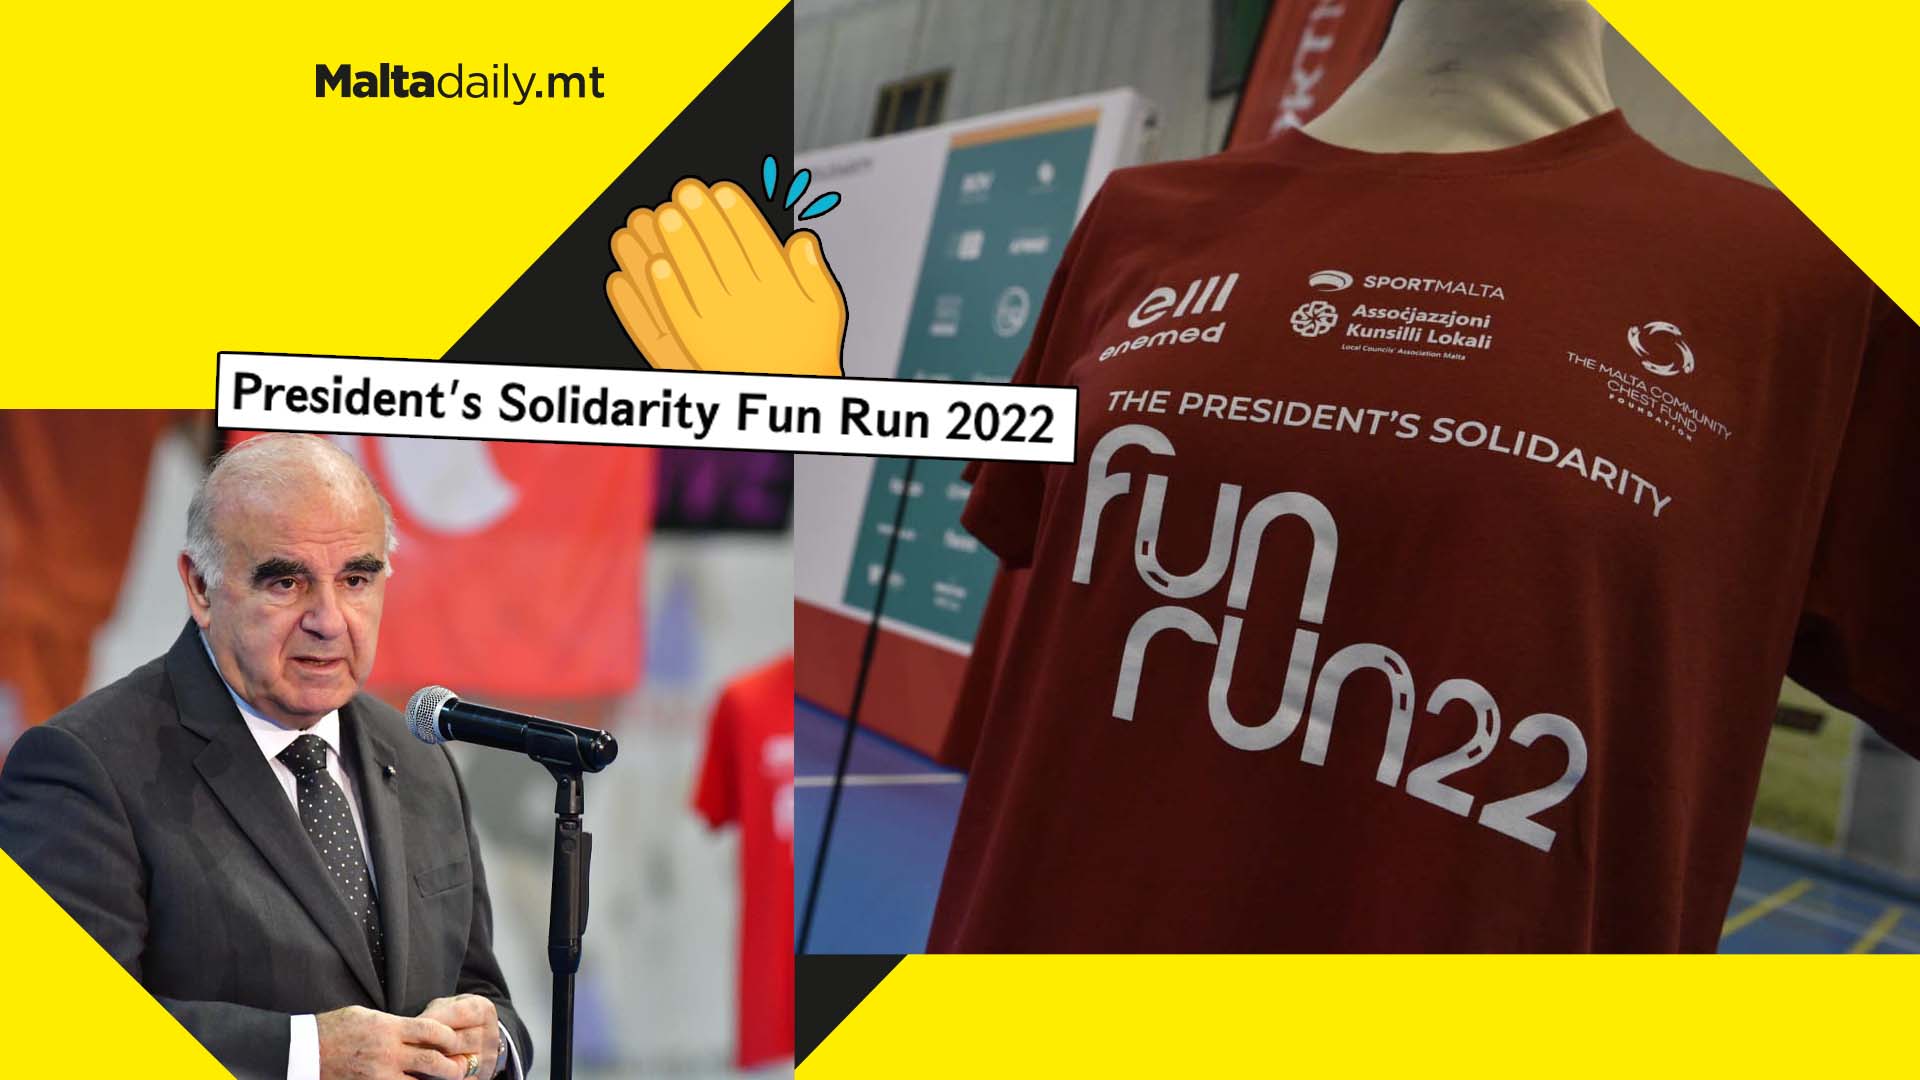 President’s Solidarity Fun Run makes official comeback after COVID hiatus